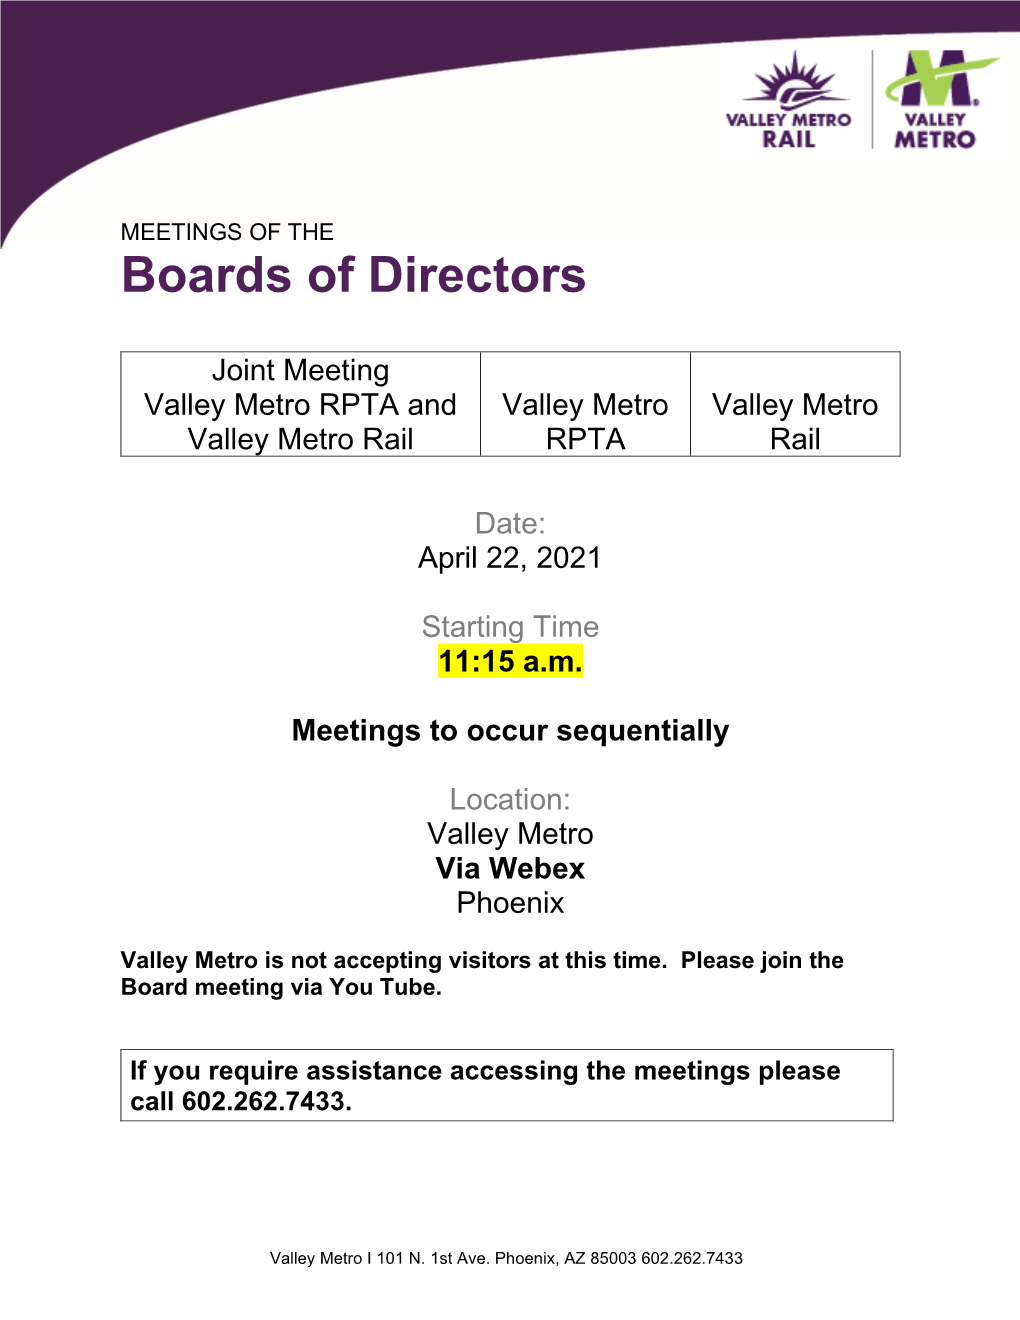 Meetings of the Board of Directors